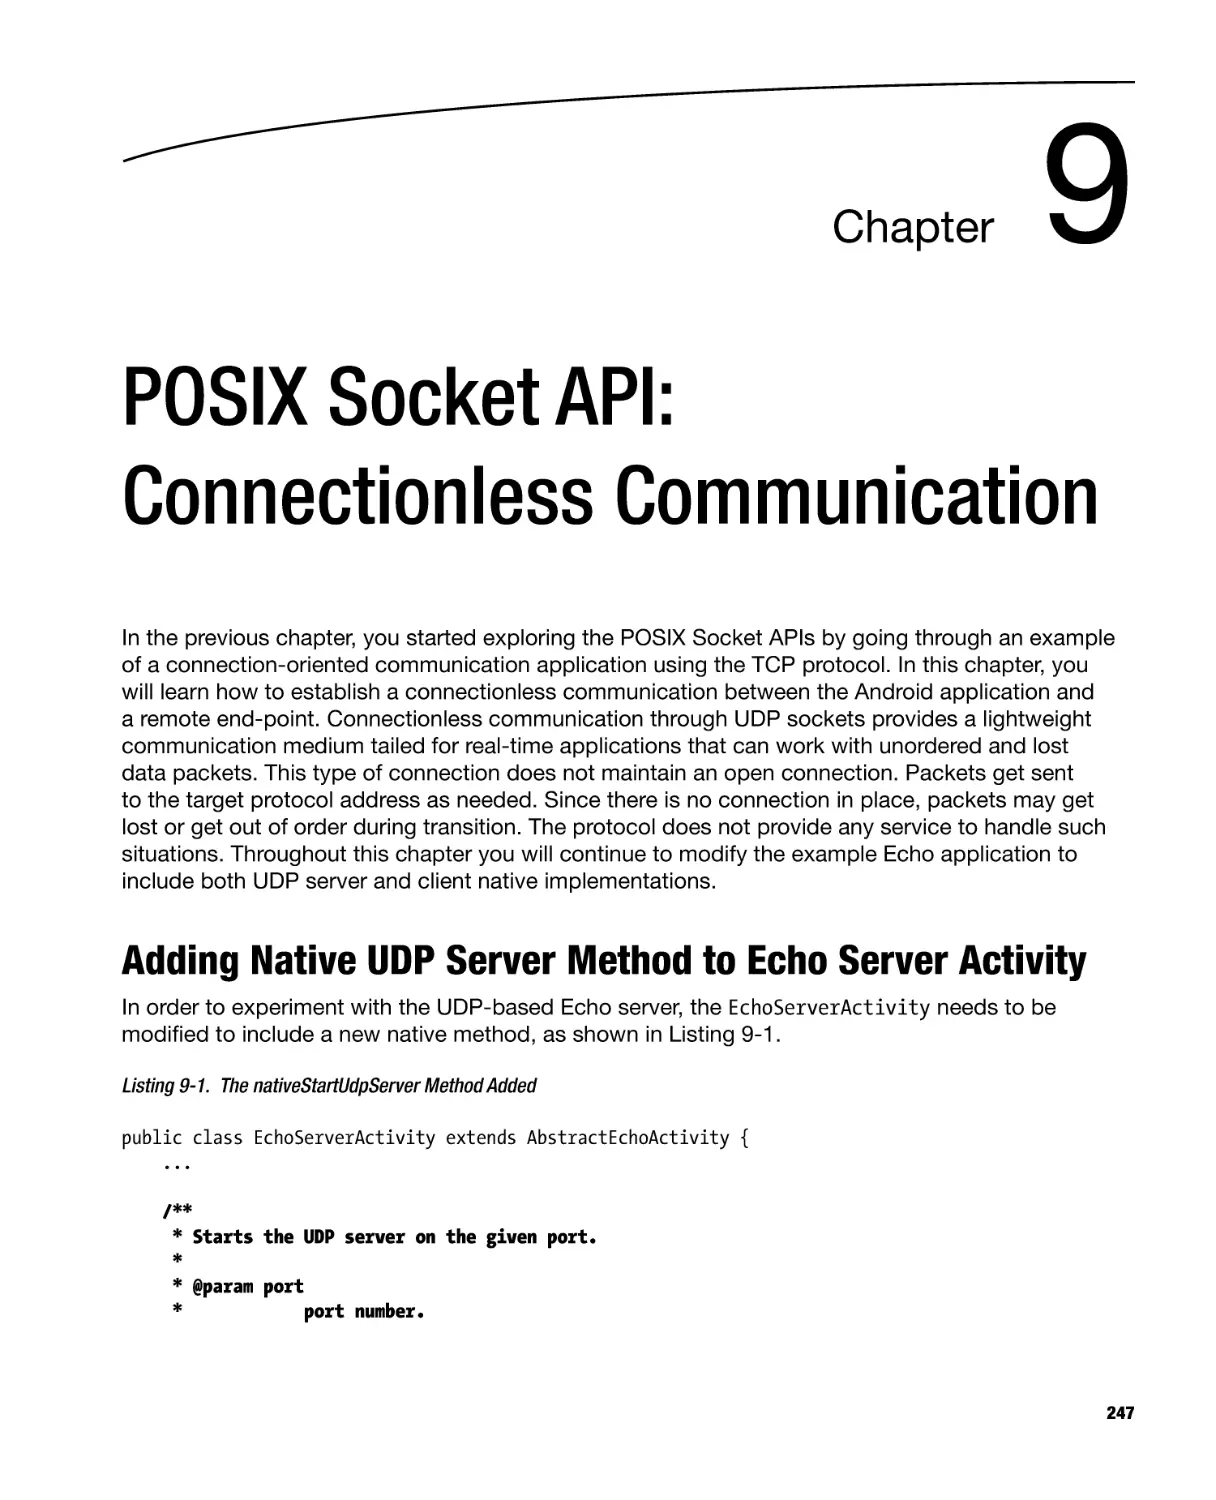 Chapter 9
Adding Native UDP Server Method to Echo Server Activity